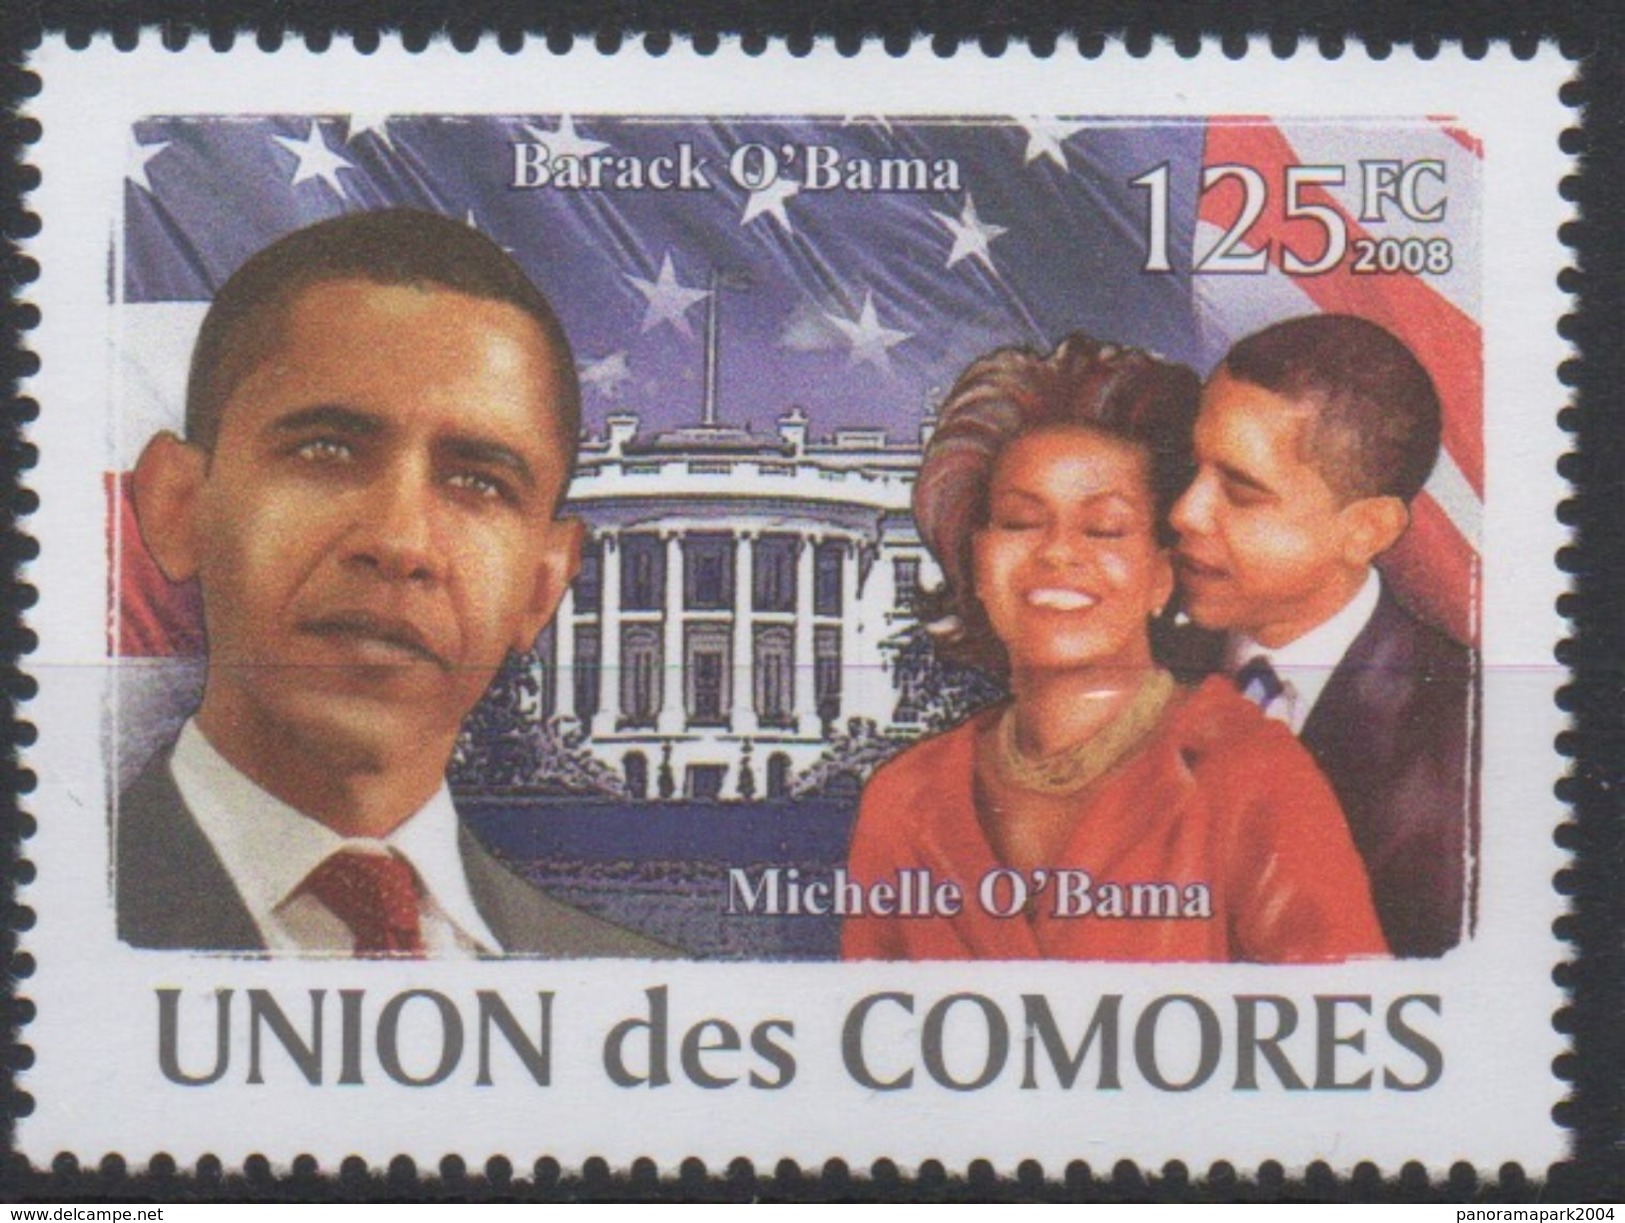 Comores Comoros Komoren 2008 USA President Barack Michelle Obama The White House US Flag Mi. I-VI Bl. I Unissued - Timbres